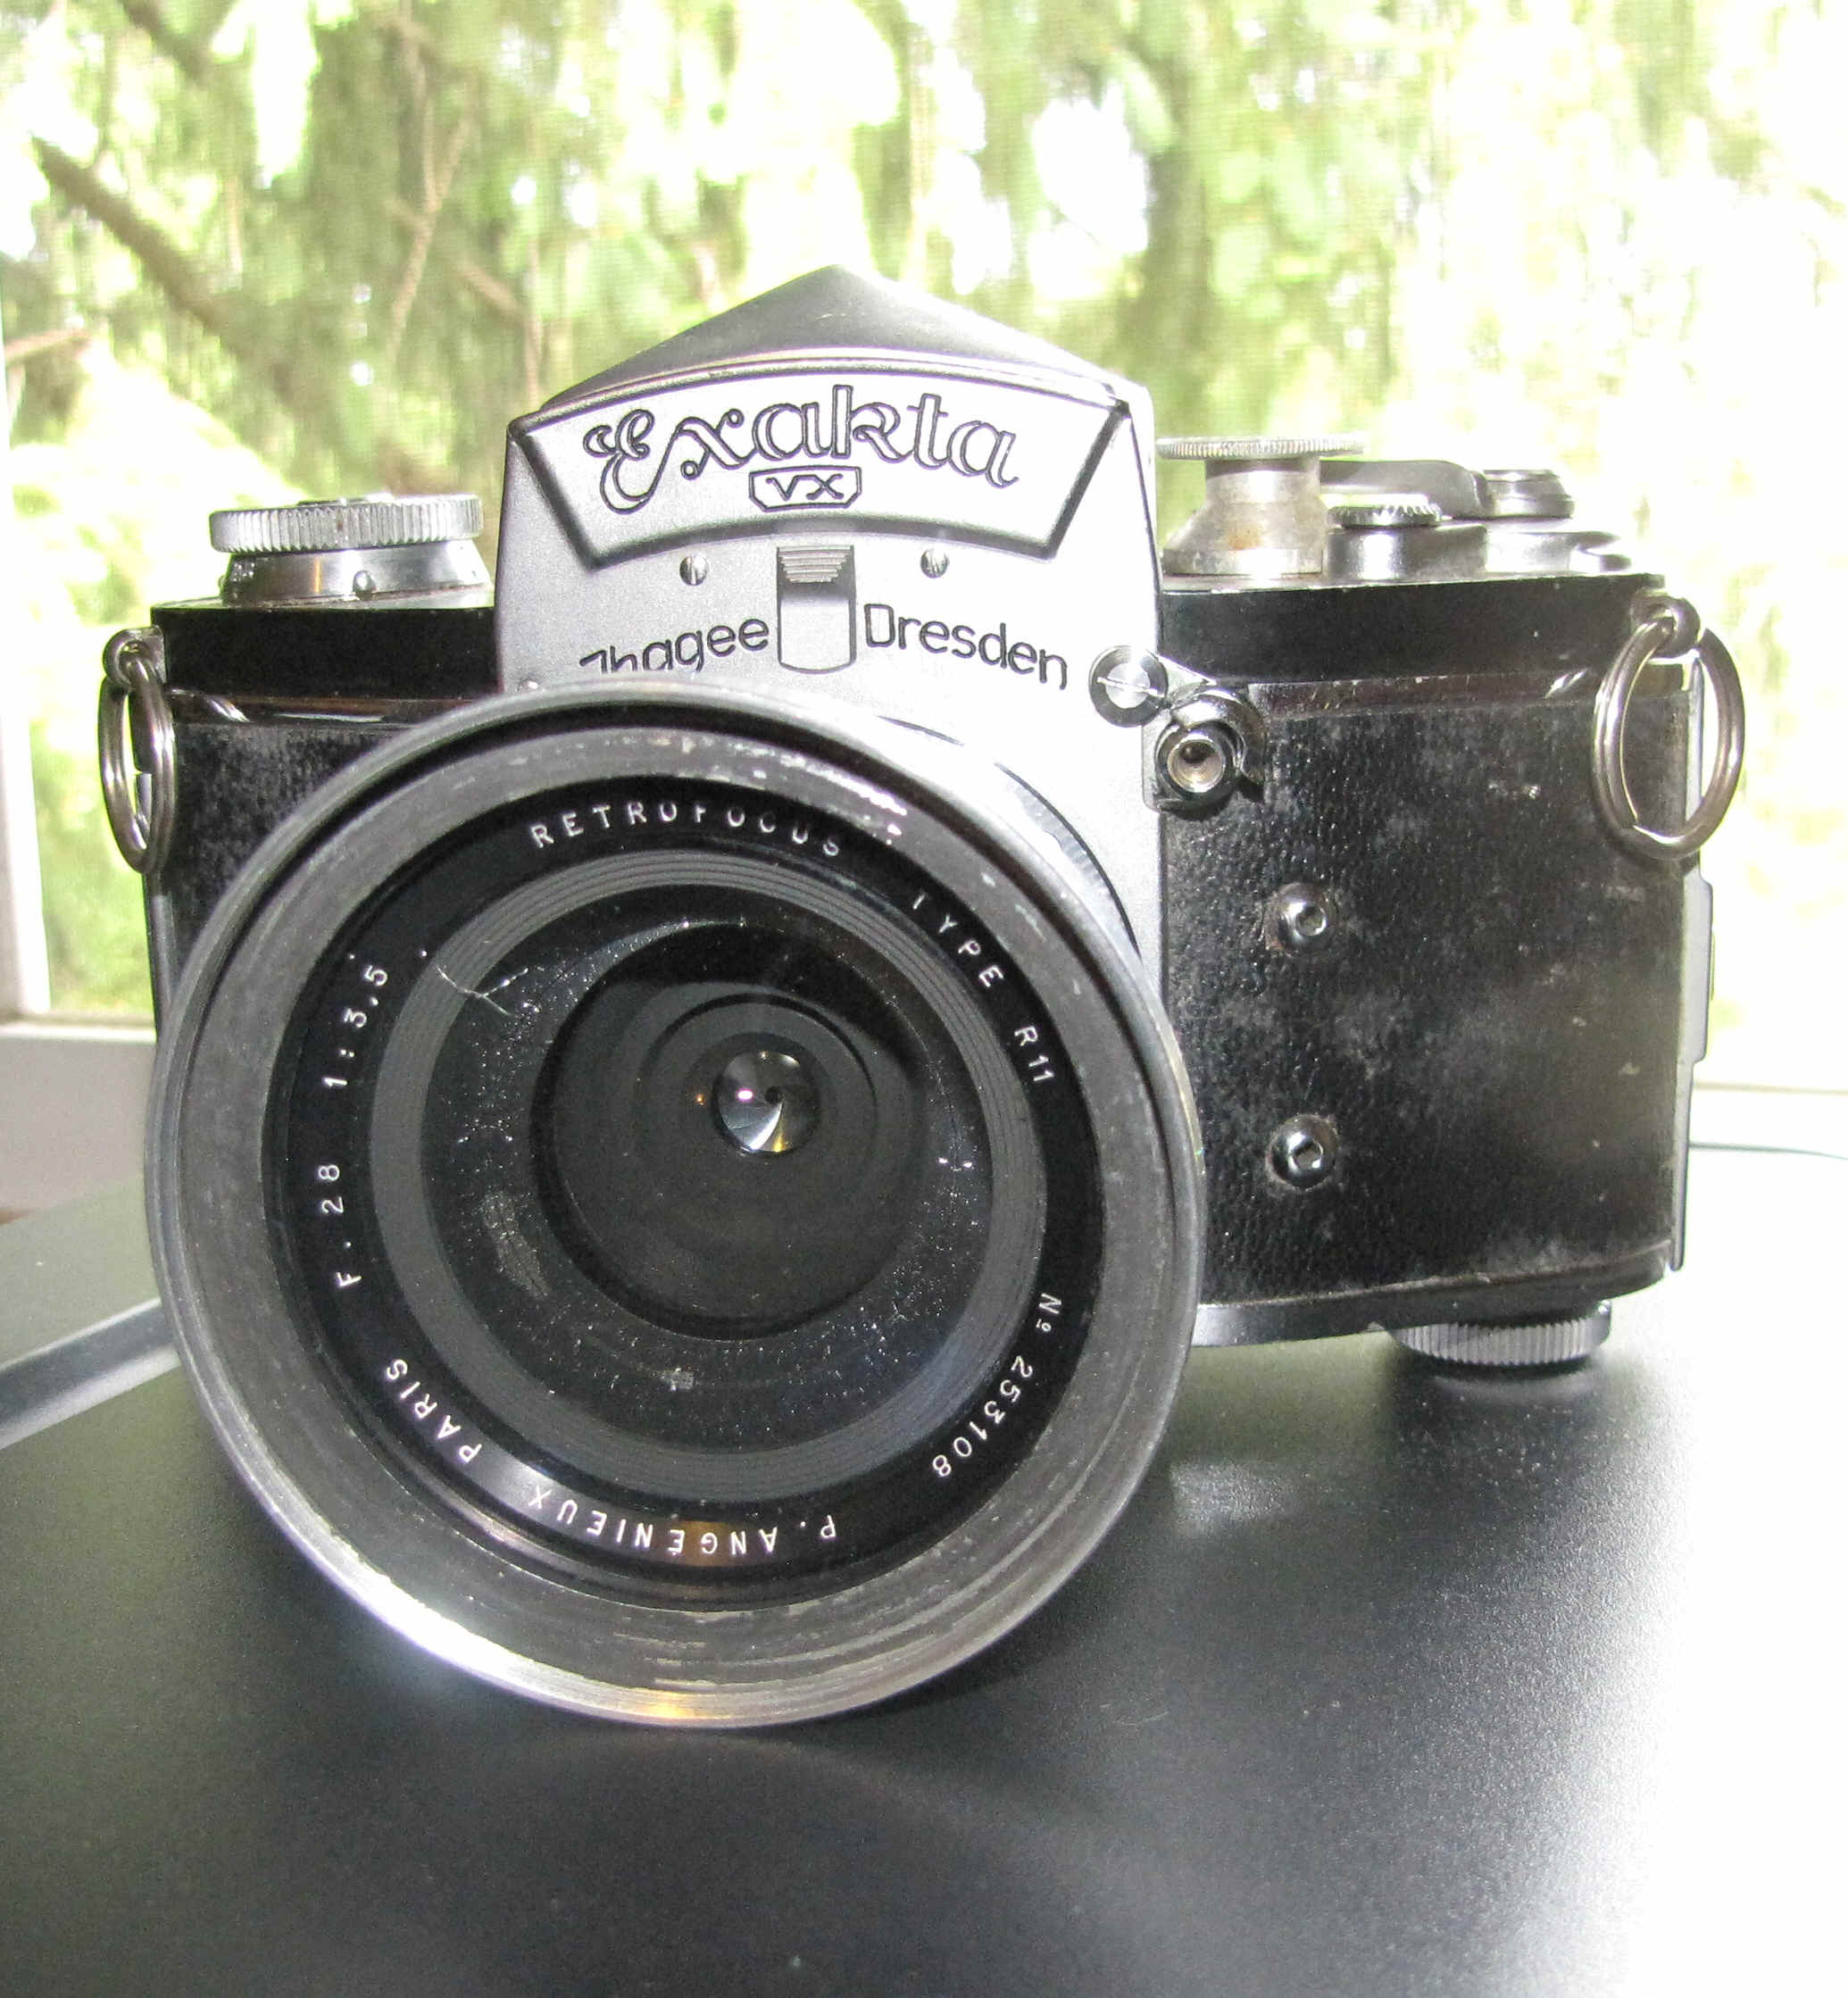 Antique Cameras Wanted, old cameras for sale, camera, old cameras ...